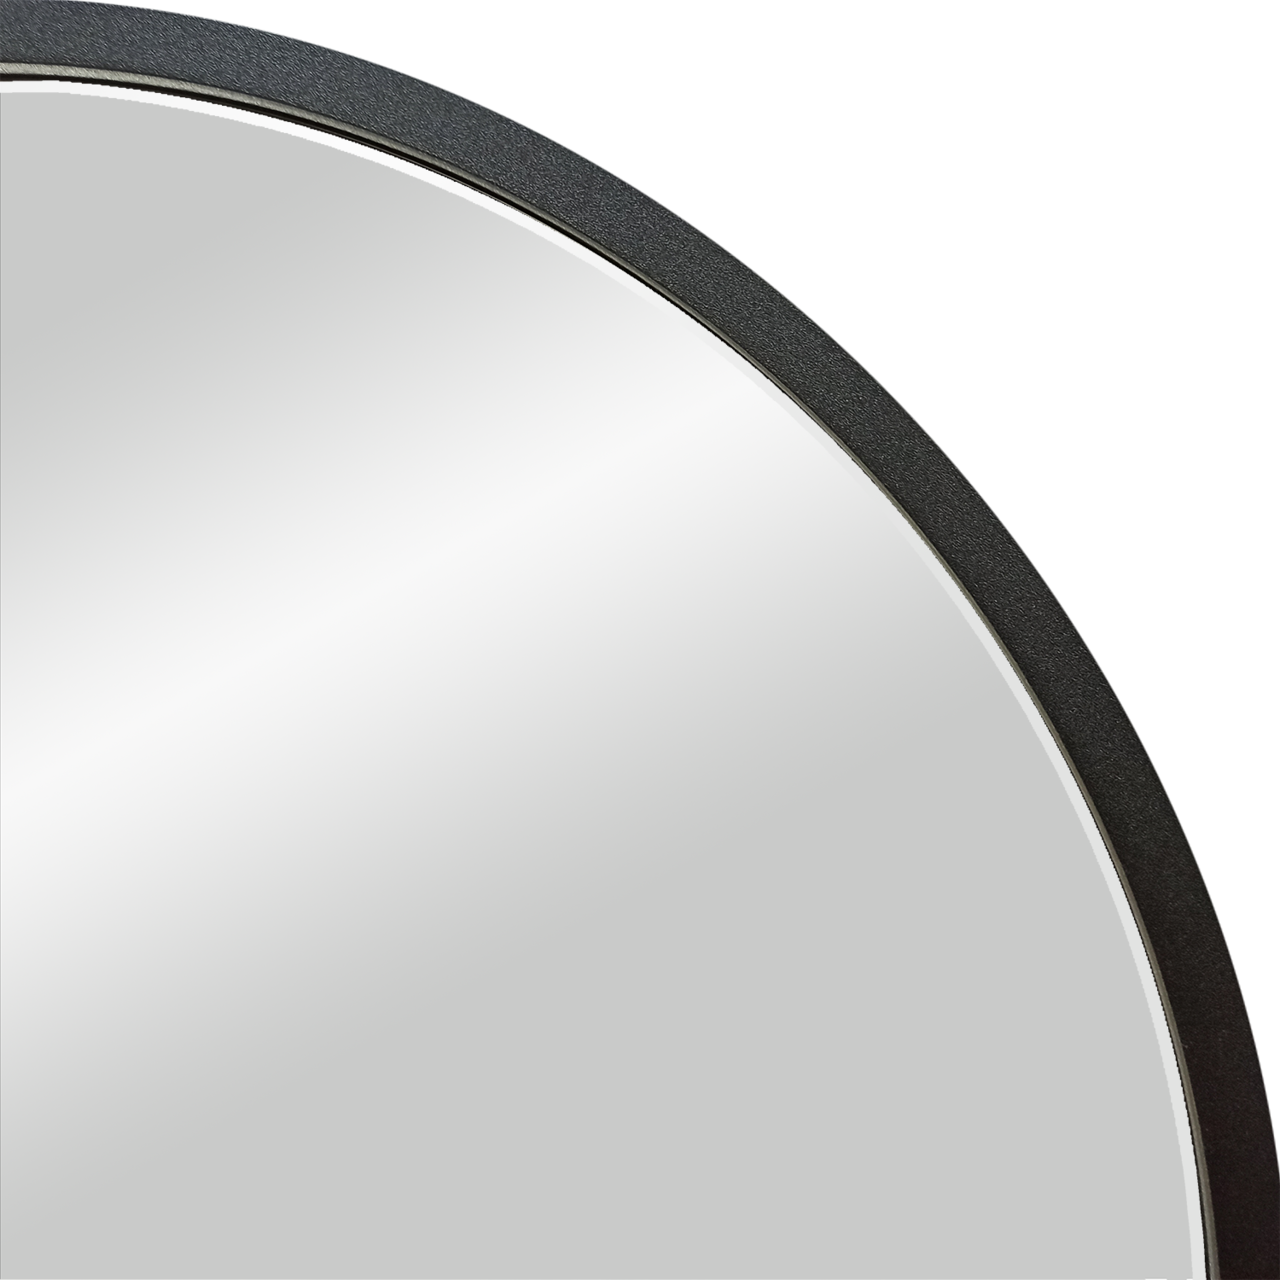 фото Зеркало Континент "Мун" черный D 600 в МДФ раме 